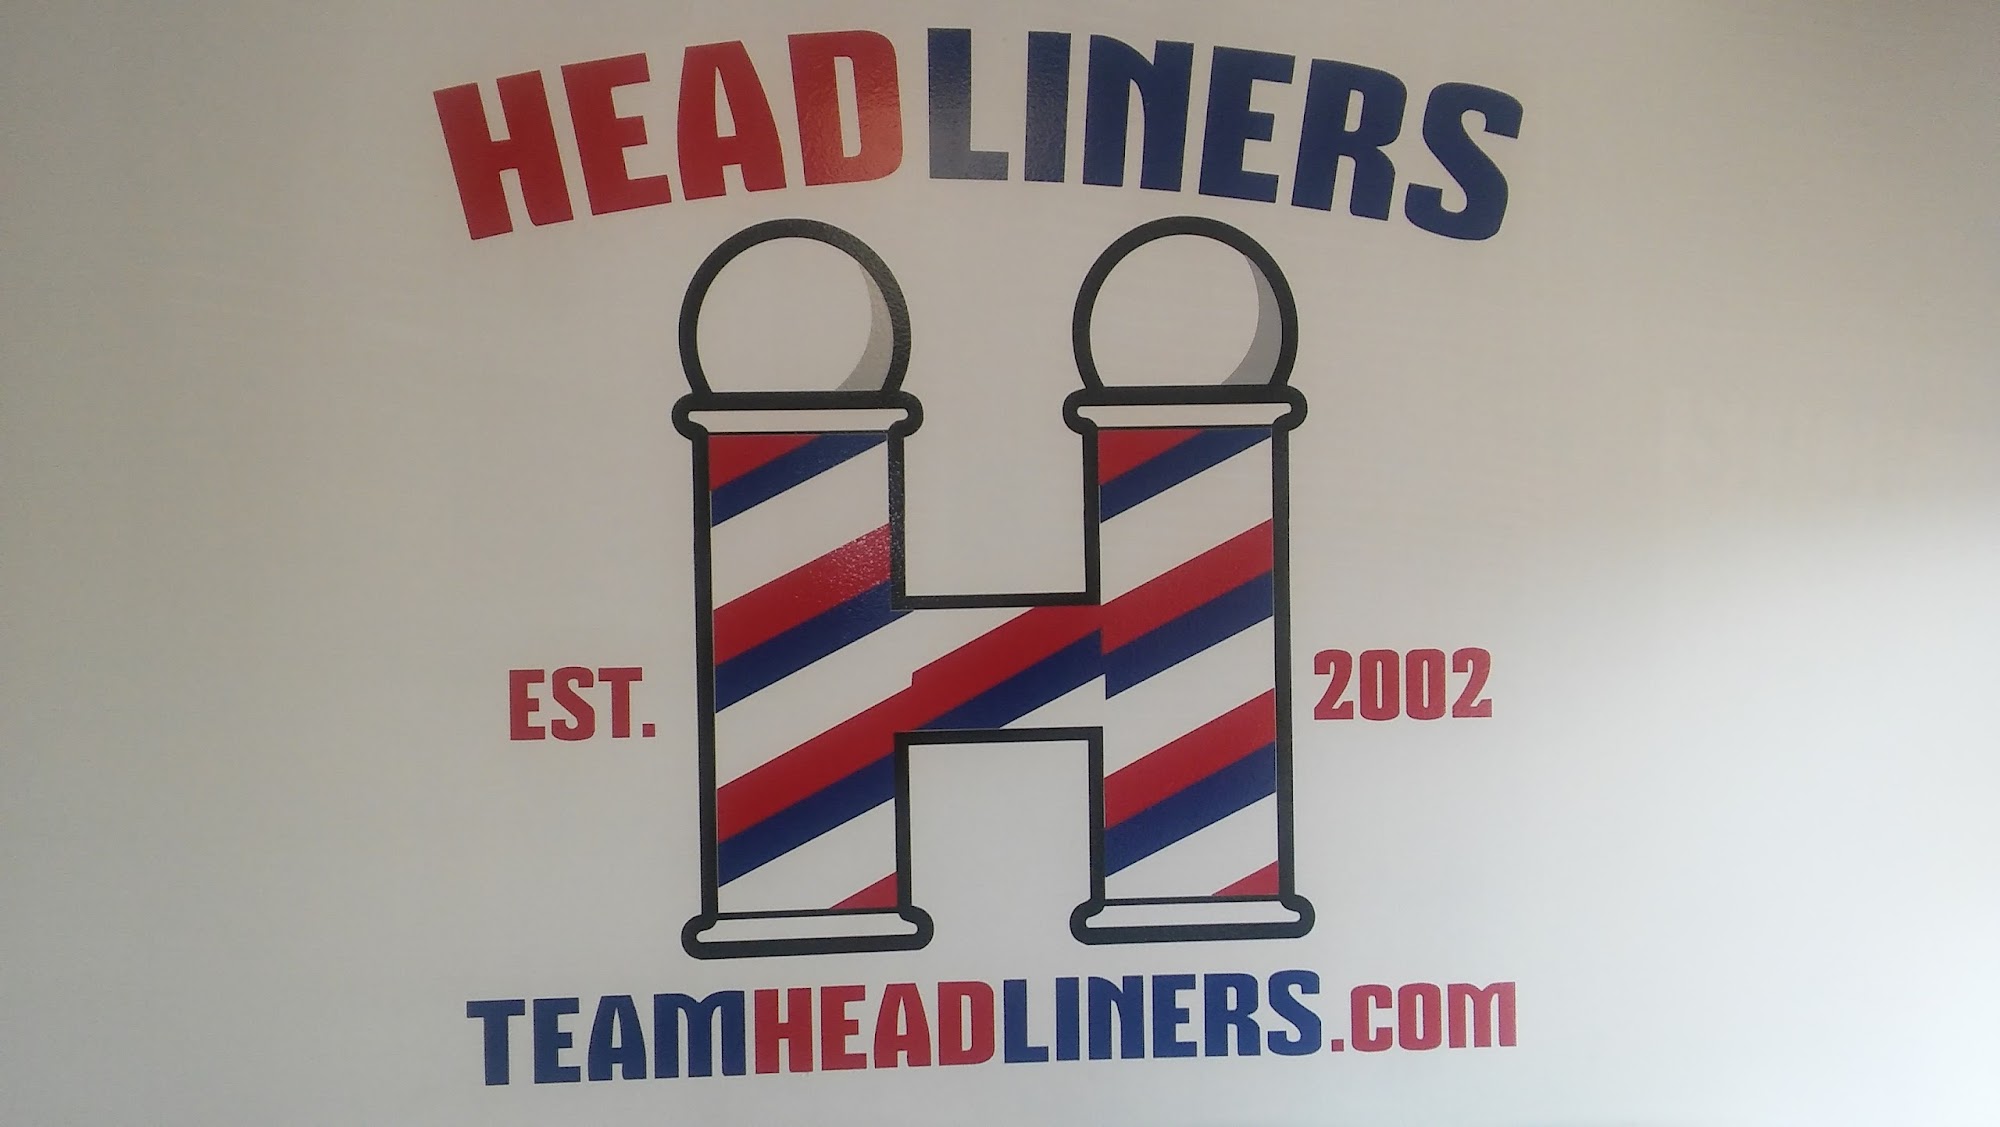 Headliners Barbershop 729 E Main St, Trotwood Ohio 45426